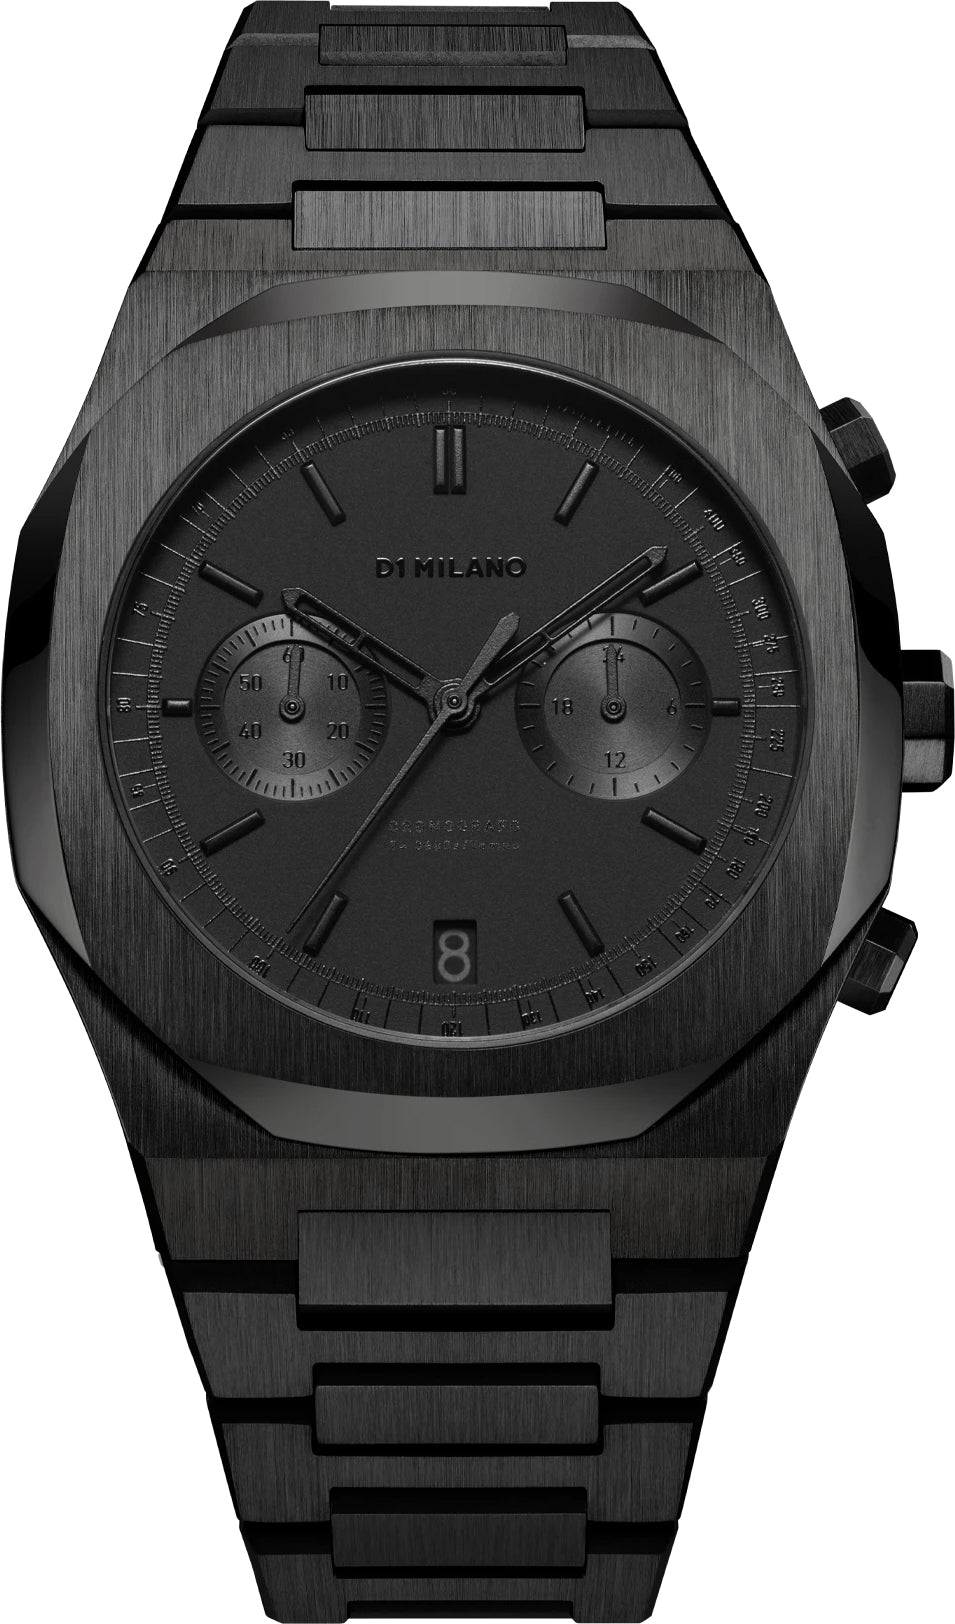 Photos - Wrist Watch Milano D1  Watch Cronografo Shadow - Black DLM-104 